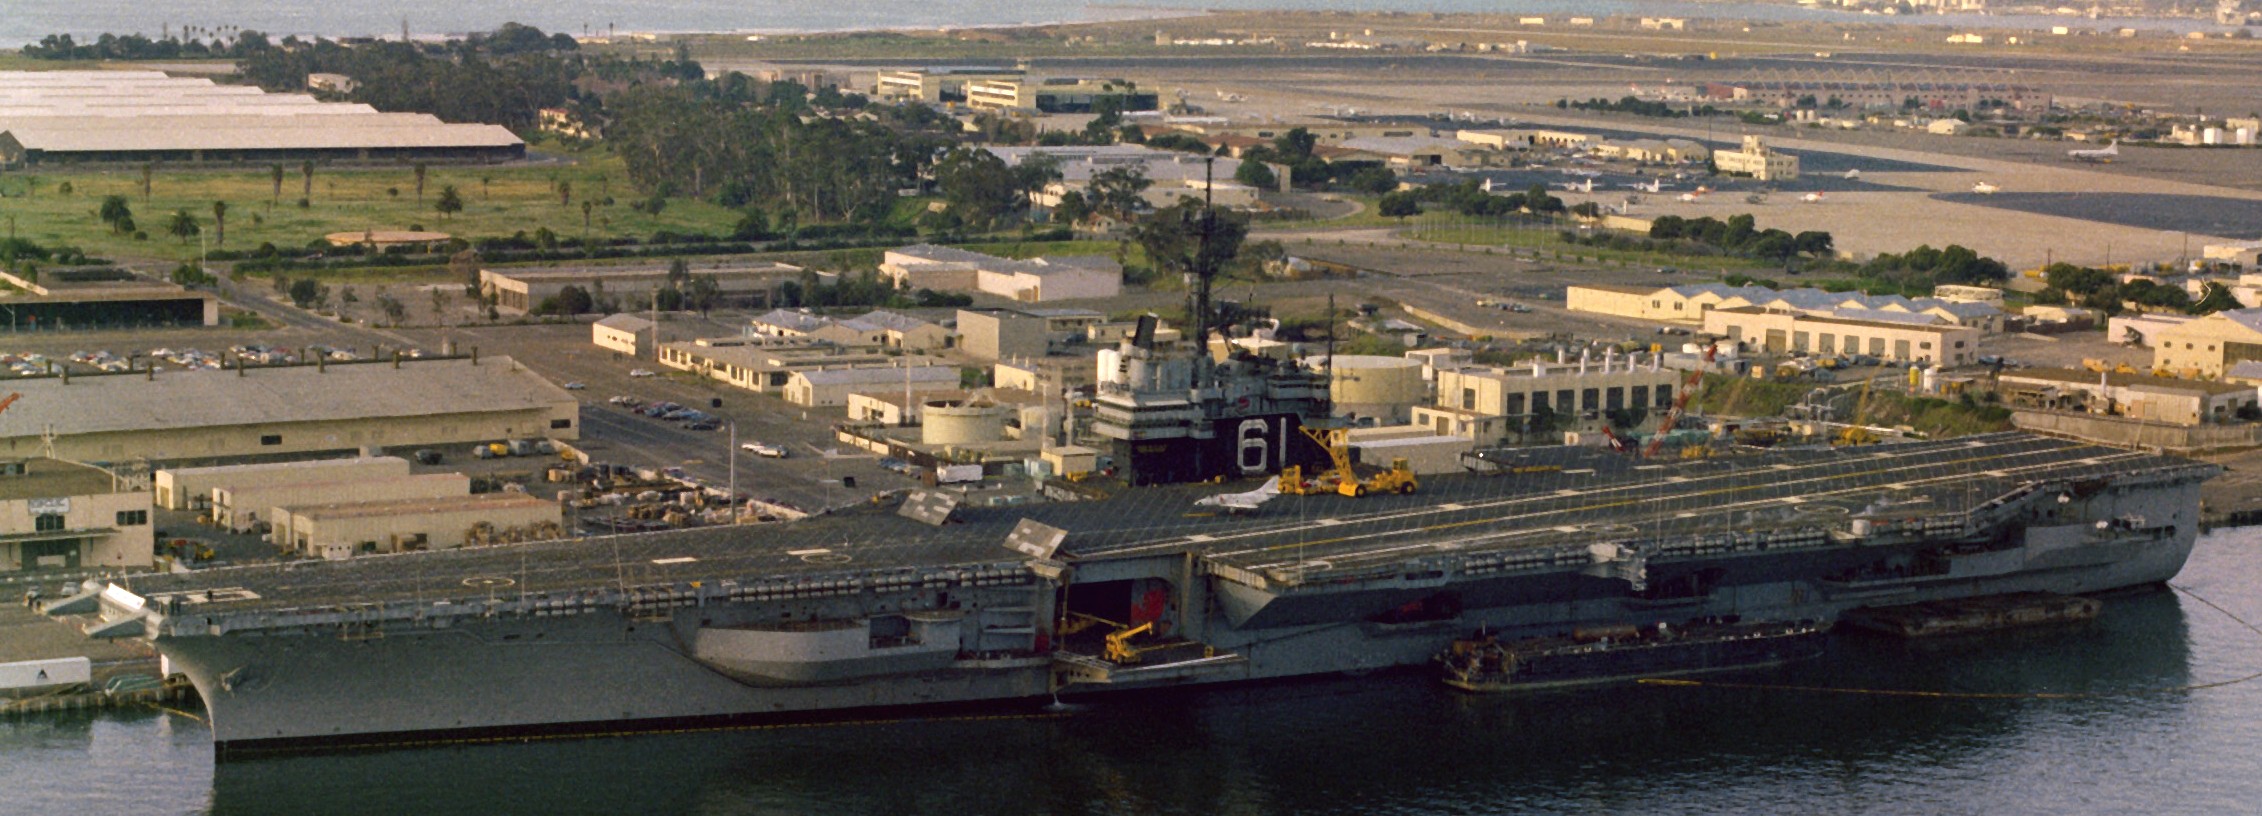 cv-61 uss ranger forrestal class aircraft carrier nas north island san diego 1983 46